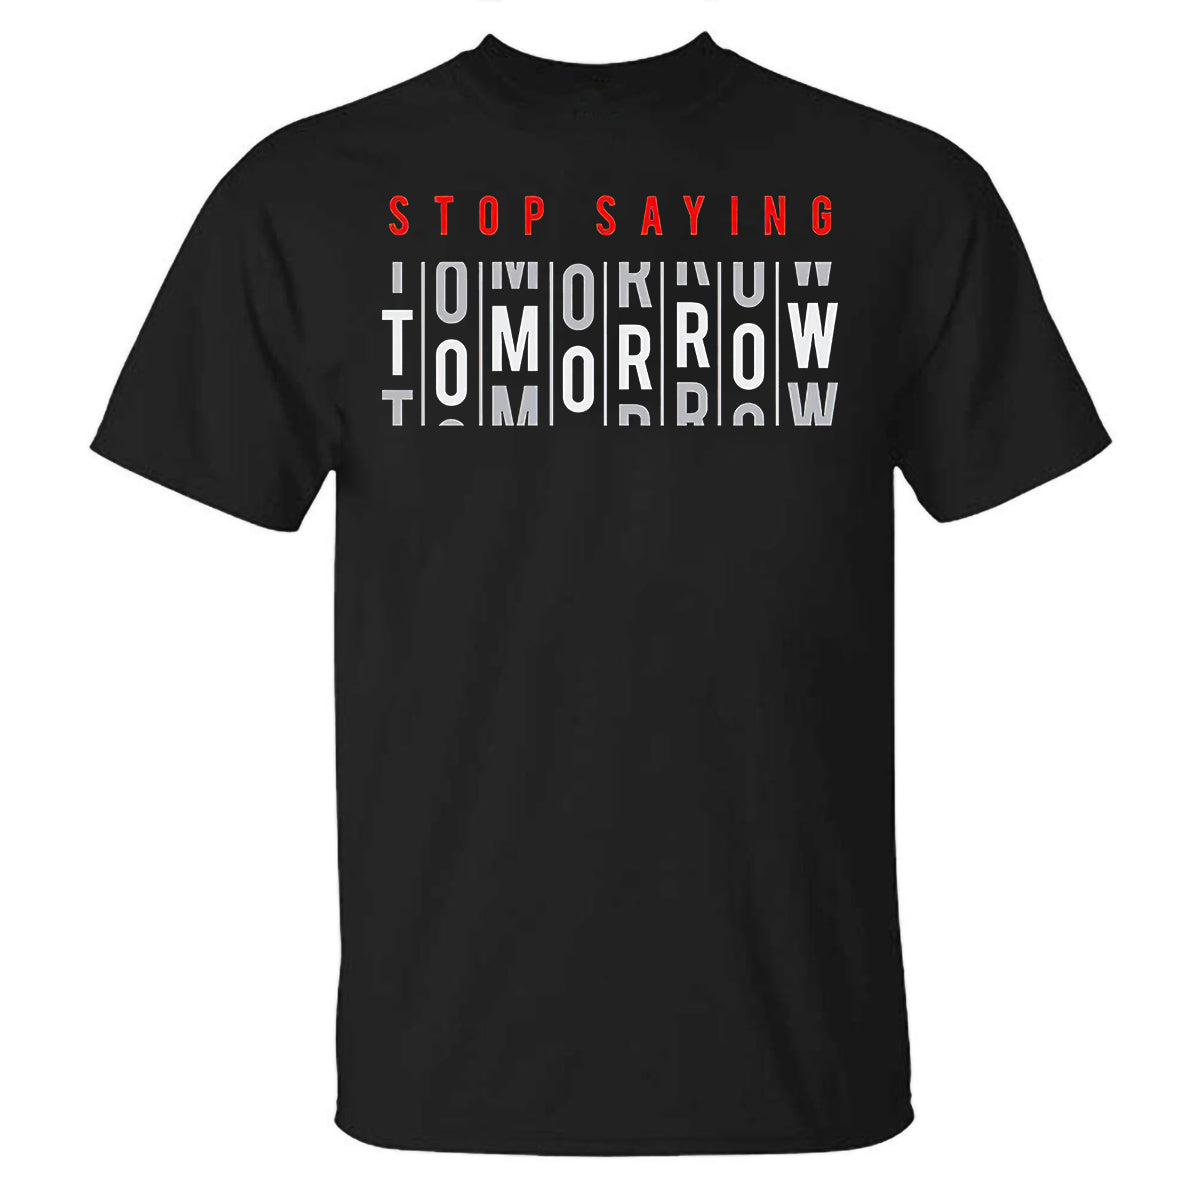 Stop Saying Tomorrow Printed T-shirt